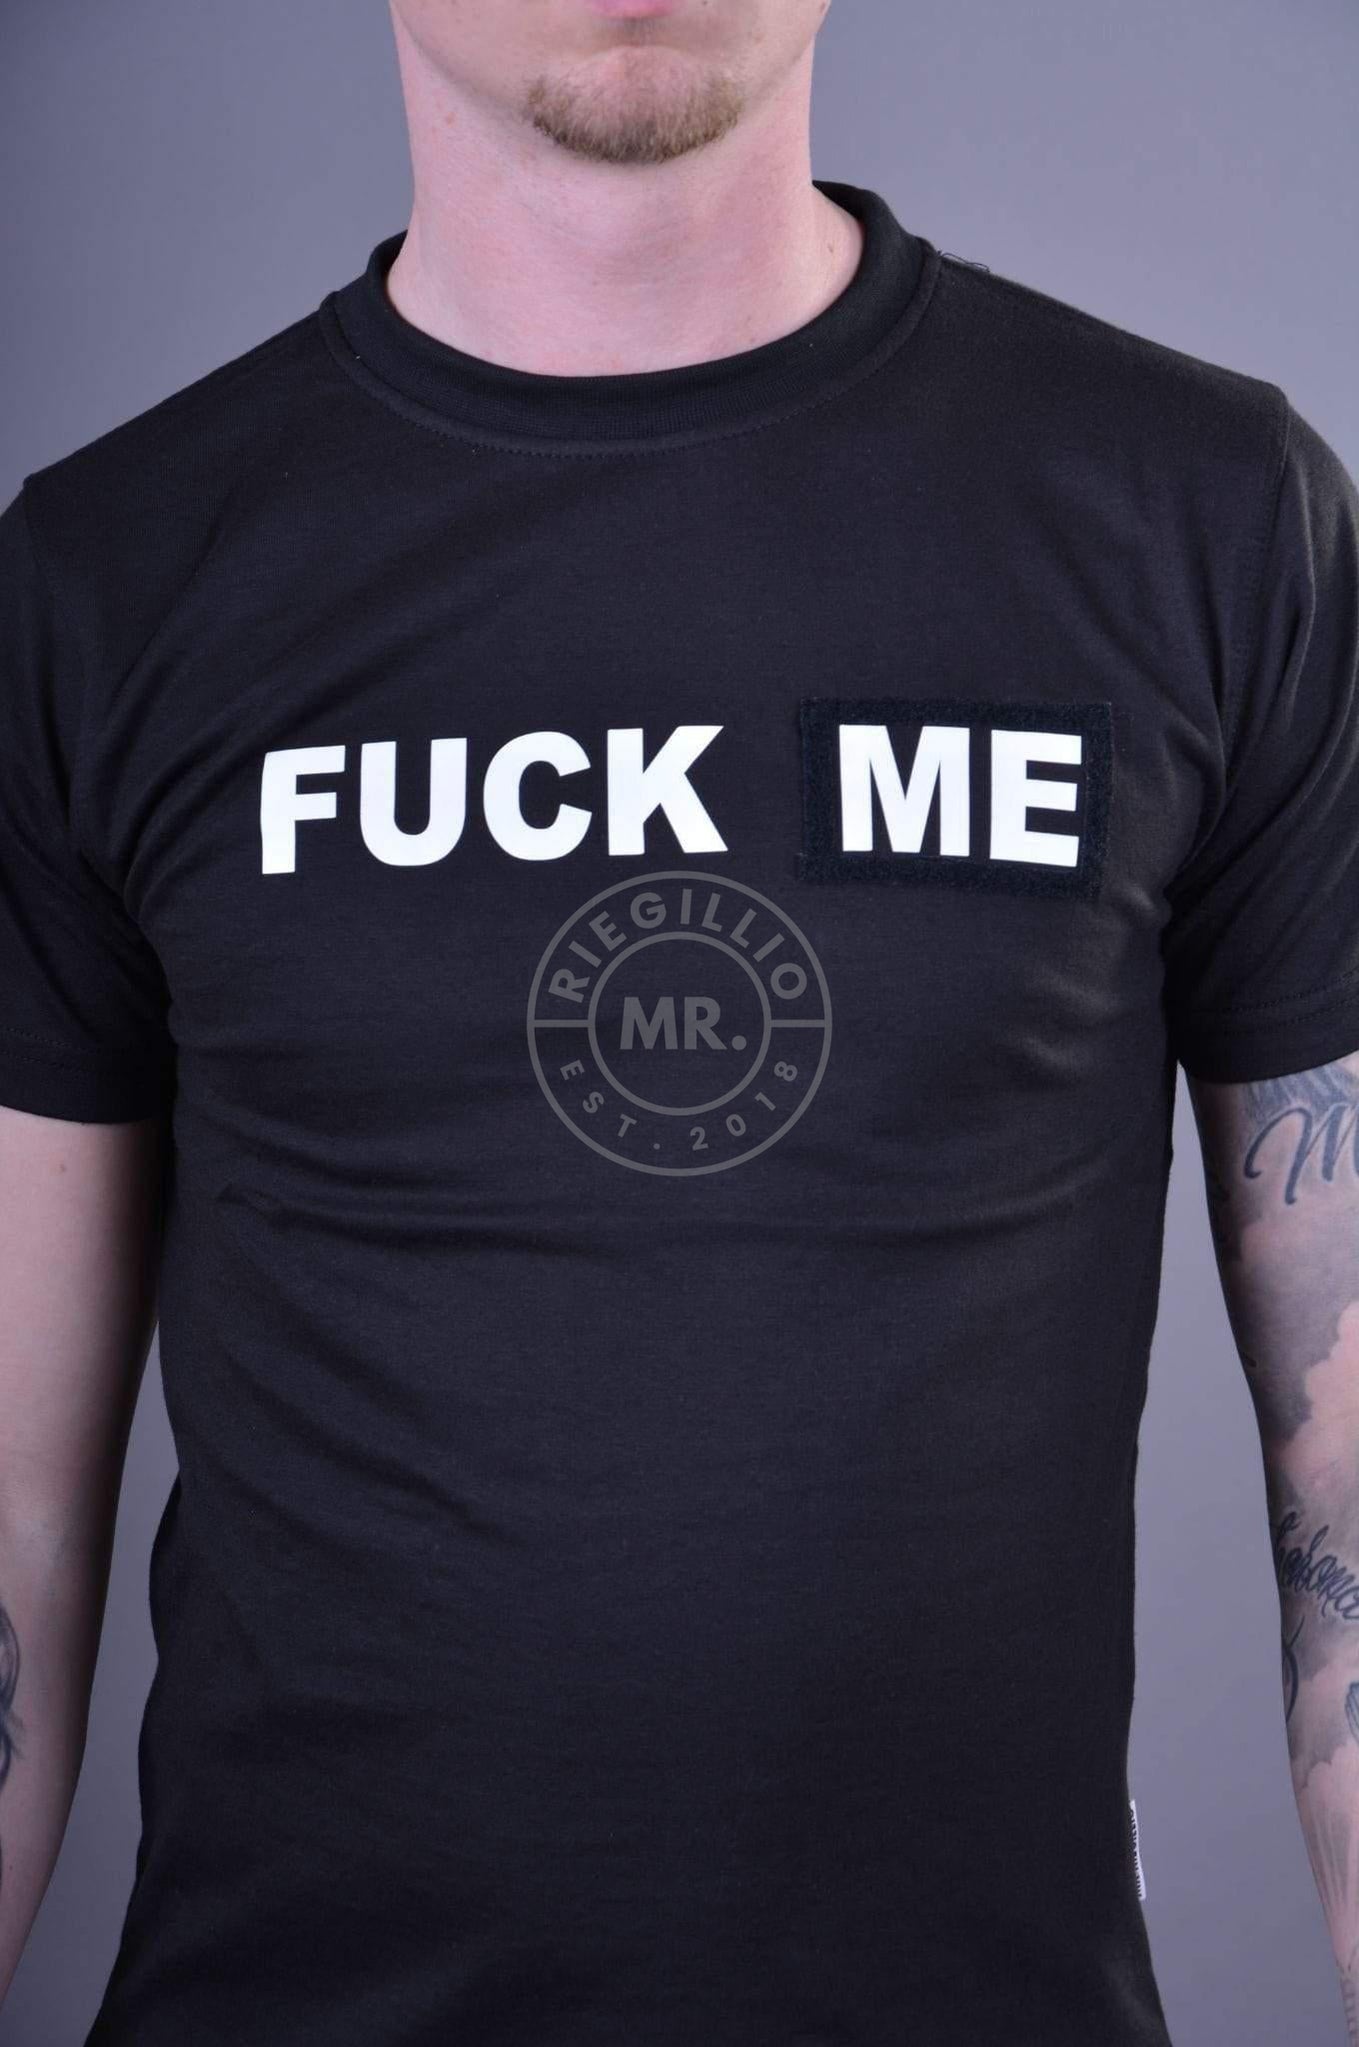 Fuck ME/YOU T-Shirt at MR. Riegillio